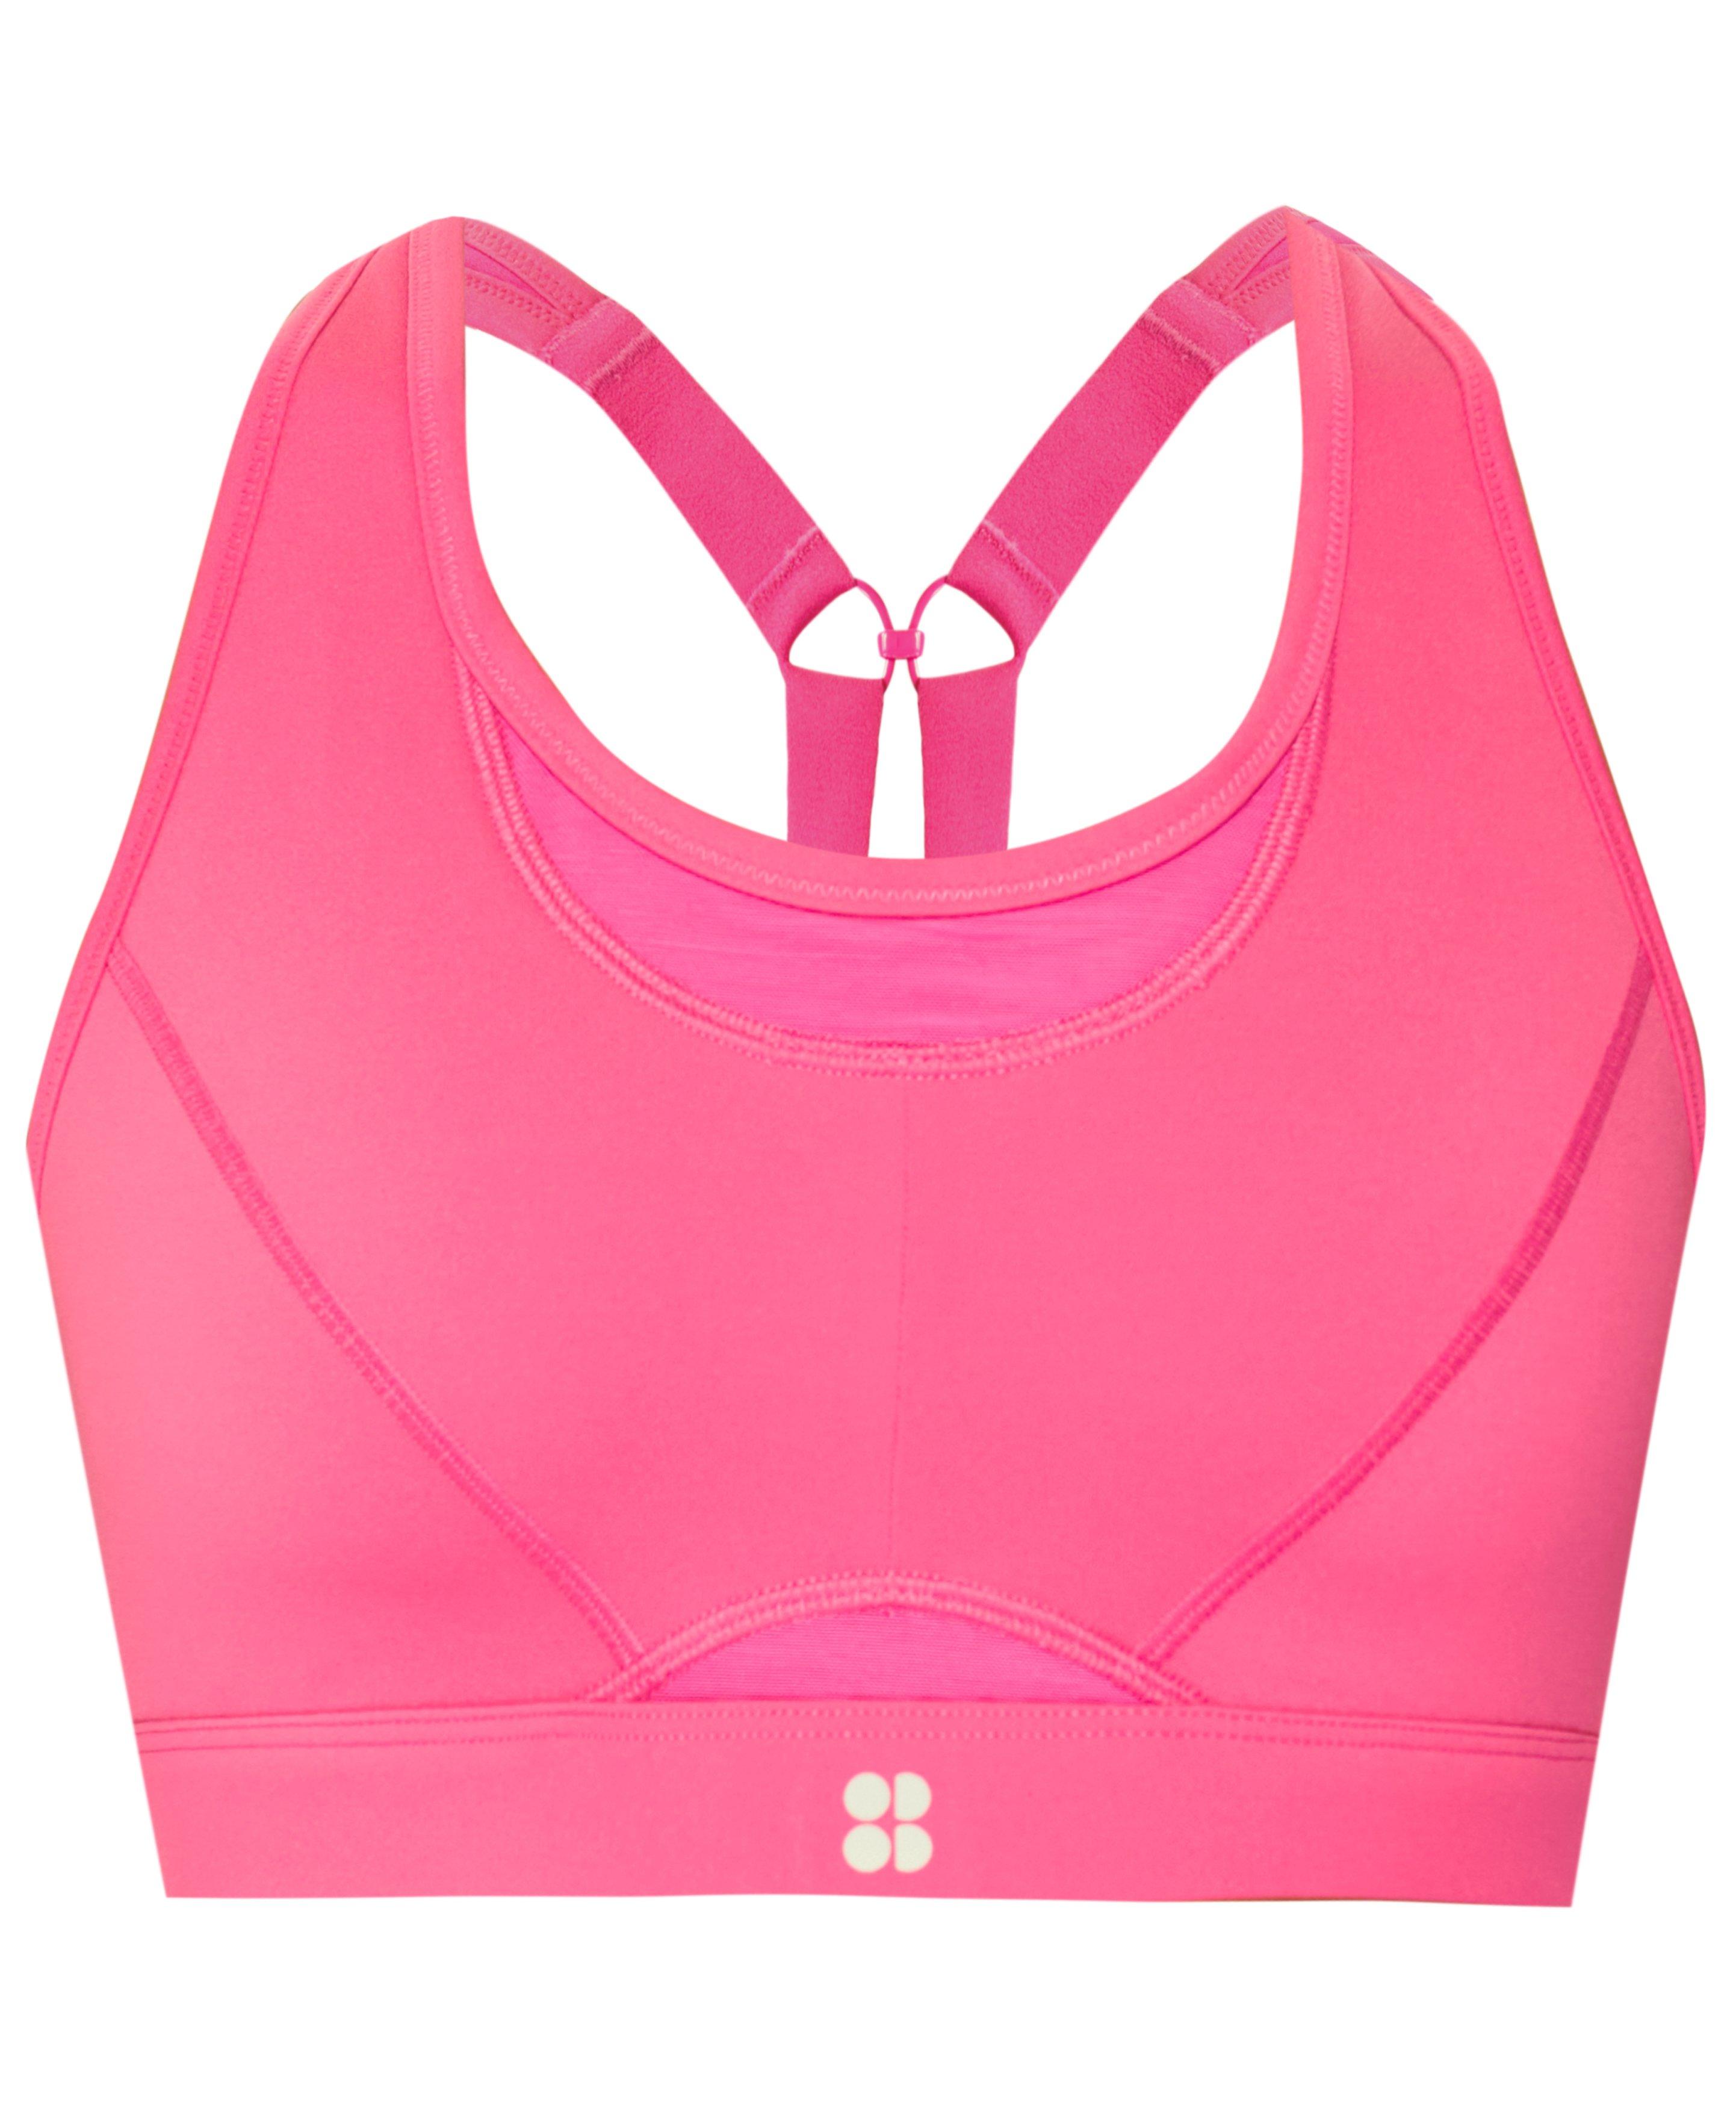 NWT Sweaty Betty [ Small ] Stamina Sports Bra in Bloom Pink #4968